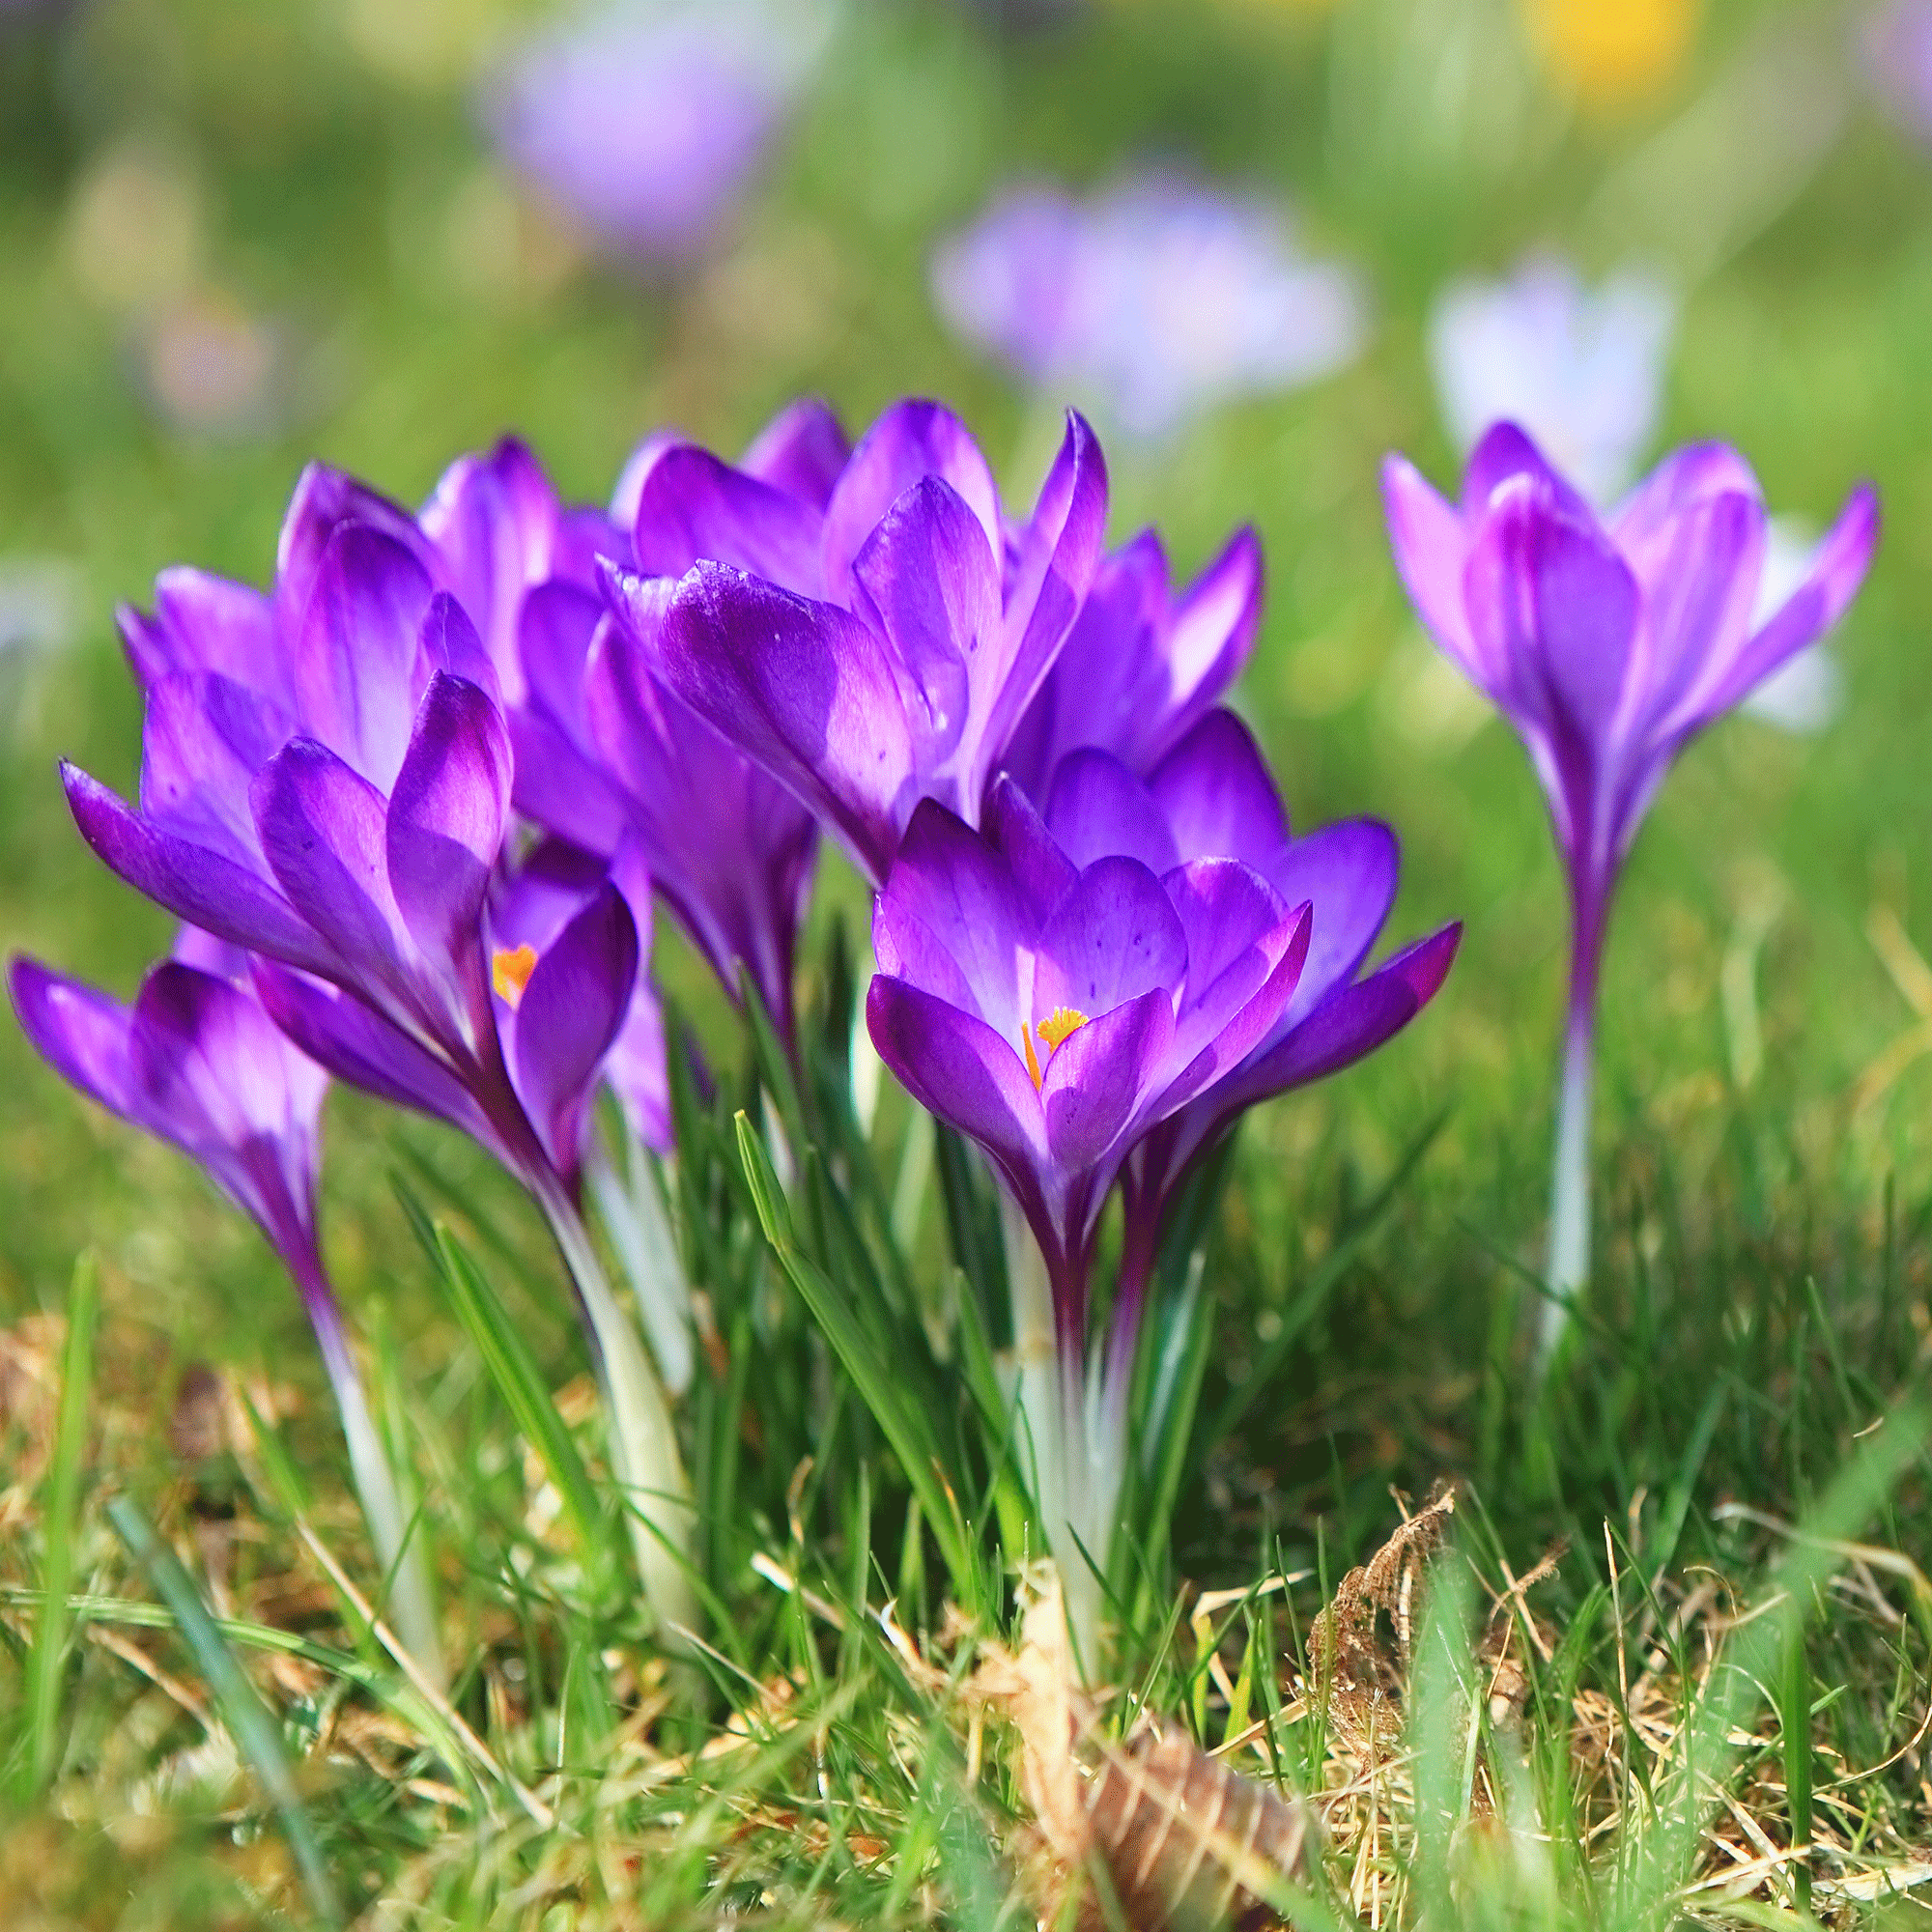 Purple crocus in lawn